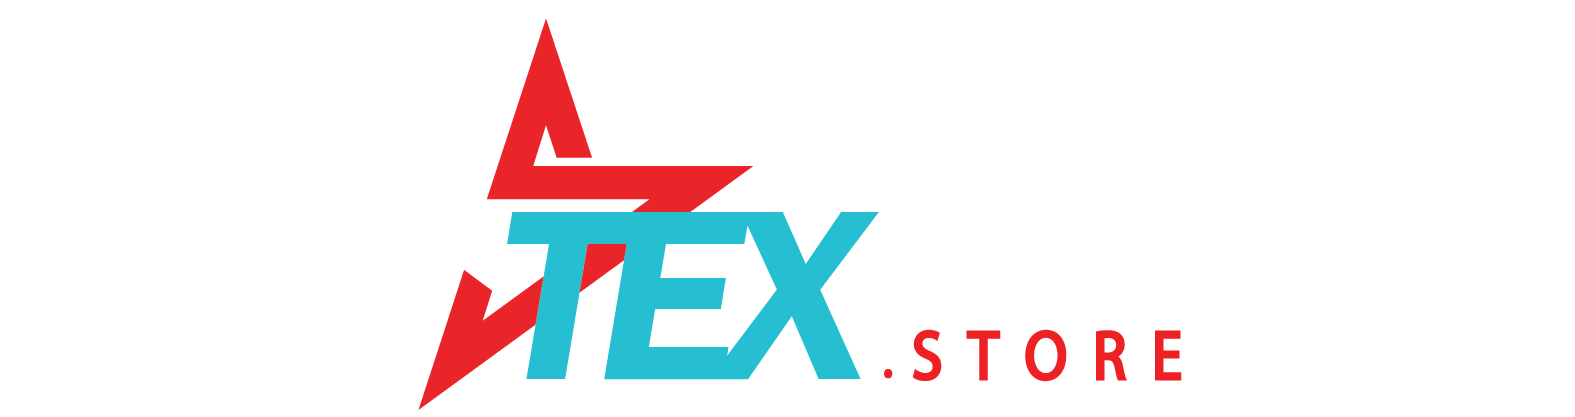 Stex.store